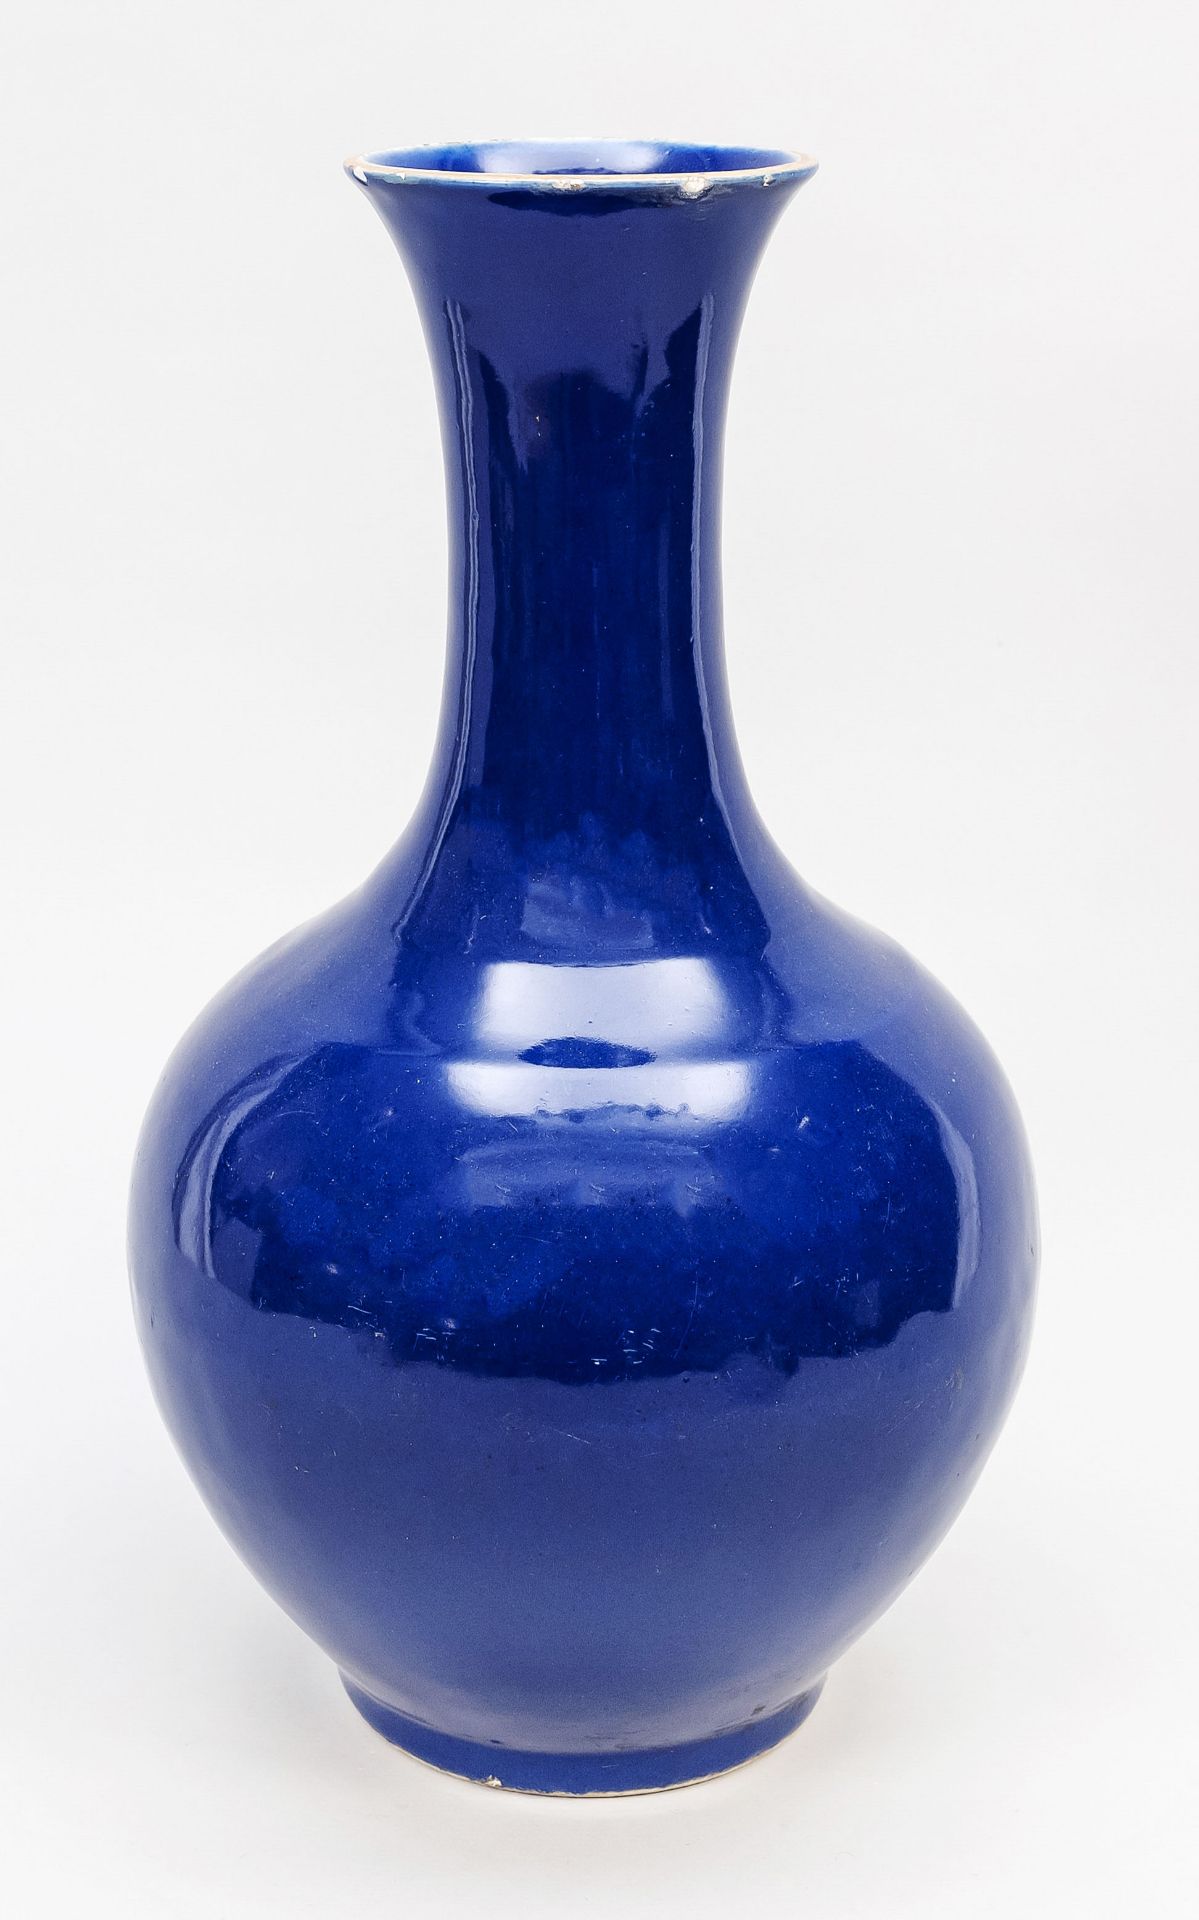 Ultramarine blue vase, China, Qing dynasty(1644-1911), Kangxi period(1662-1722), bulbous porcelain